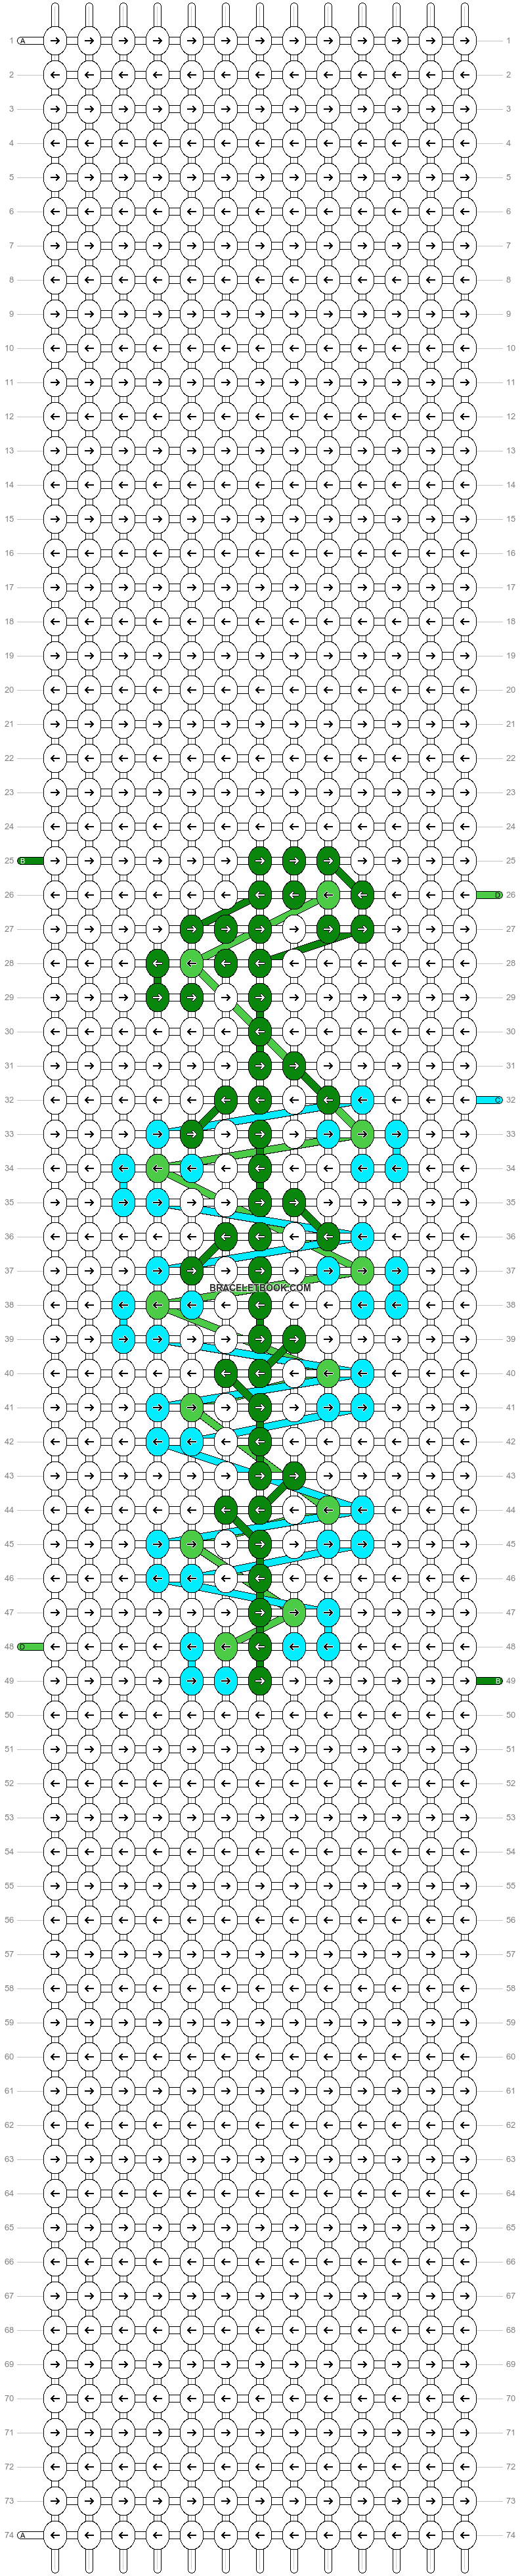 Alpha pattern #36712 variation #37551 pattern